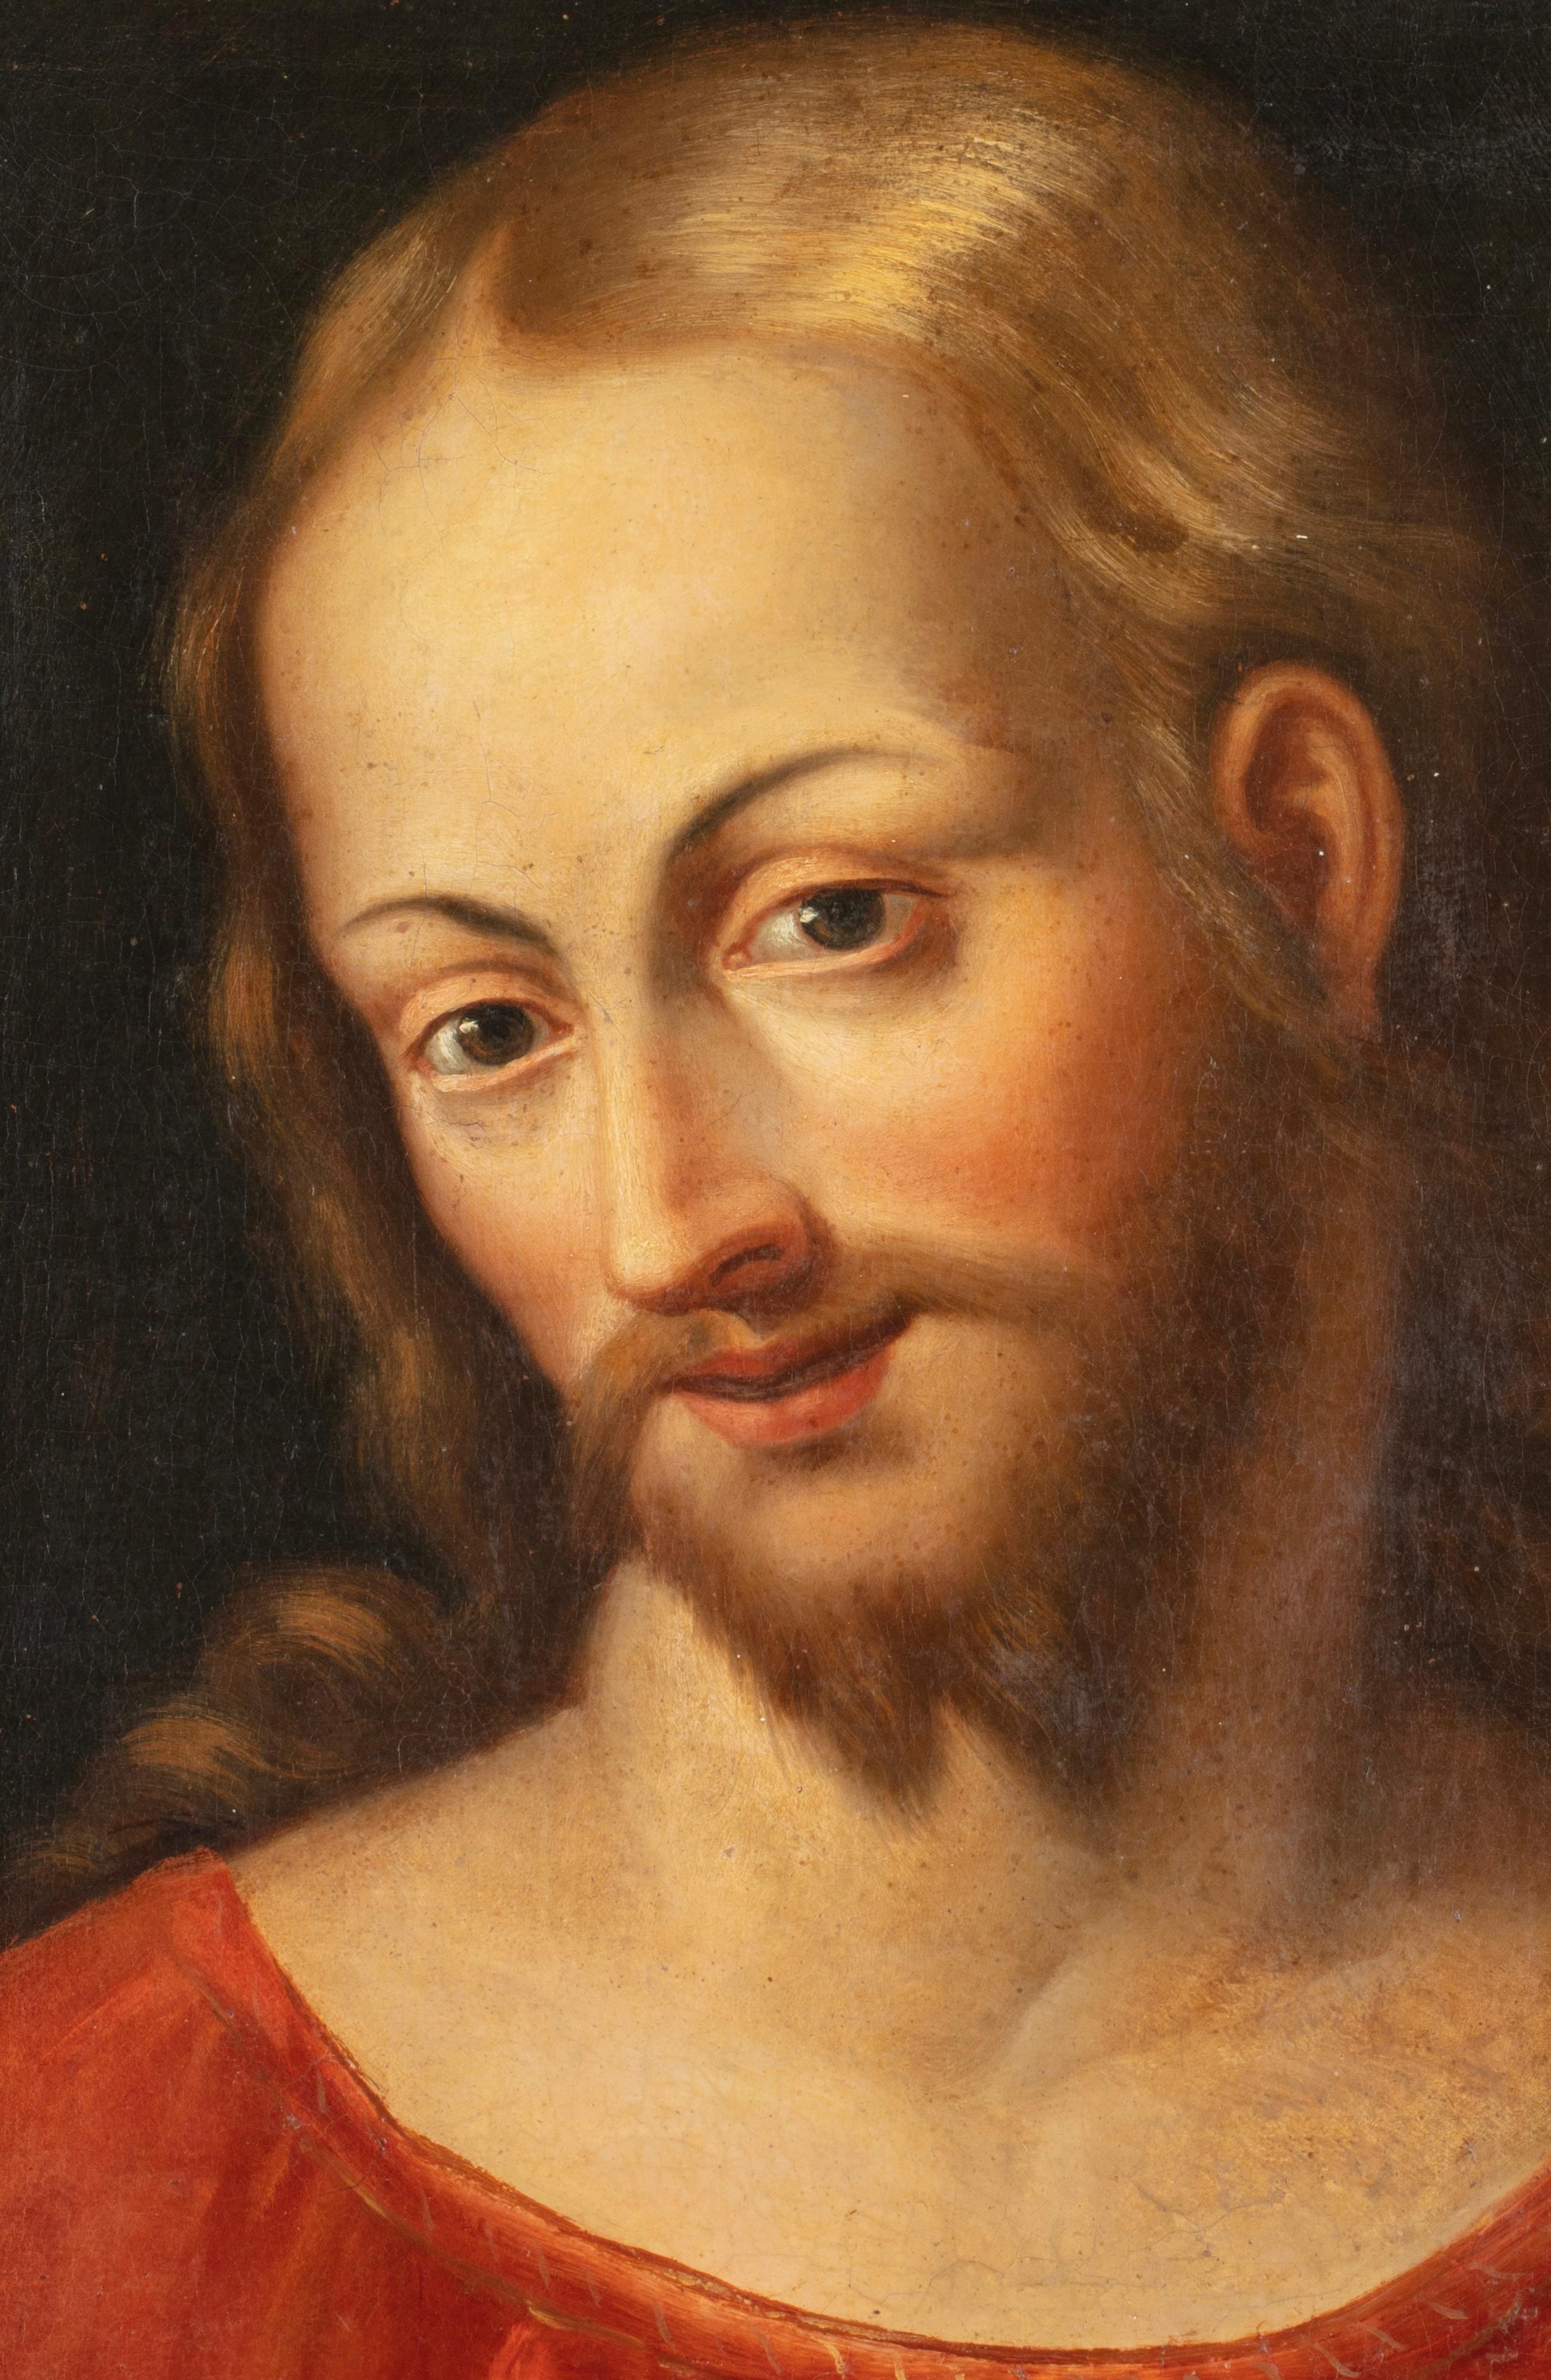 16th Century by Bernardino Detti Face of Christ Oil on Canvas - Old Masters Painting by Bernardino Detti (Pistoia, 1498 – Pistoia, 1572)